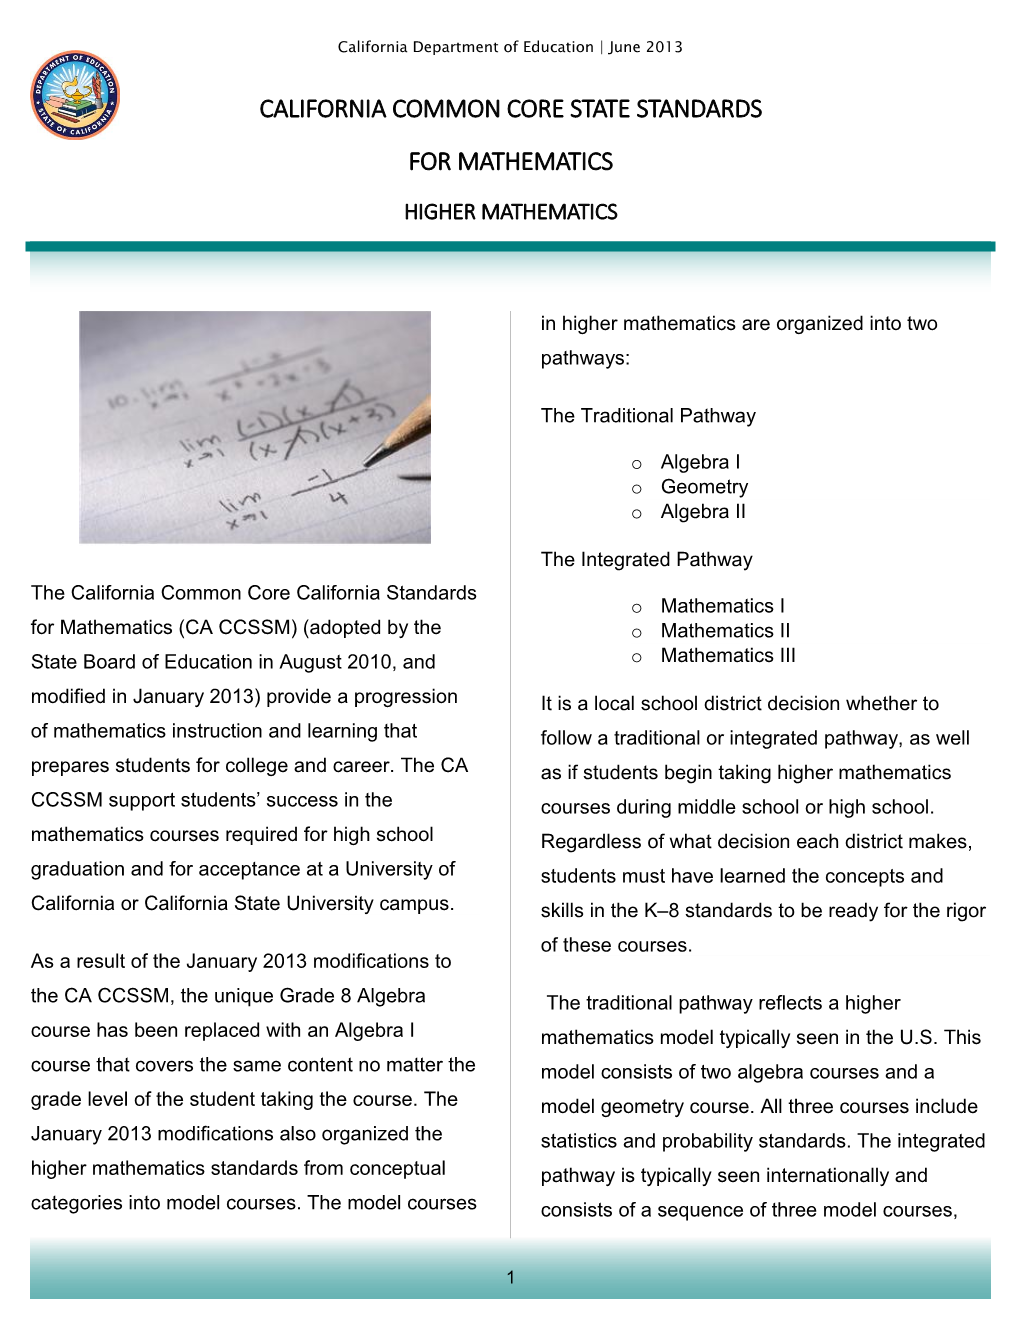 Higher Mathematics Flyer - Common Core Standards (CA Dept of Education)